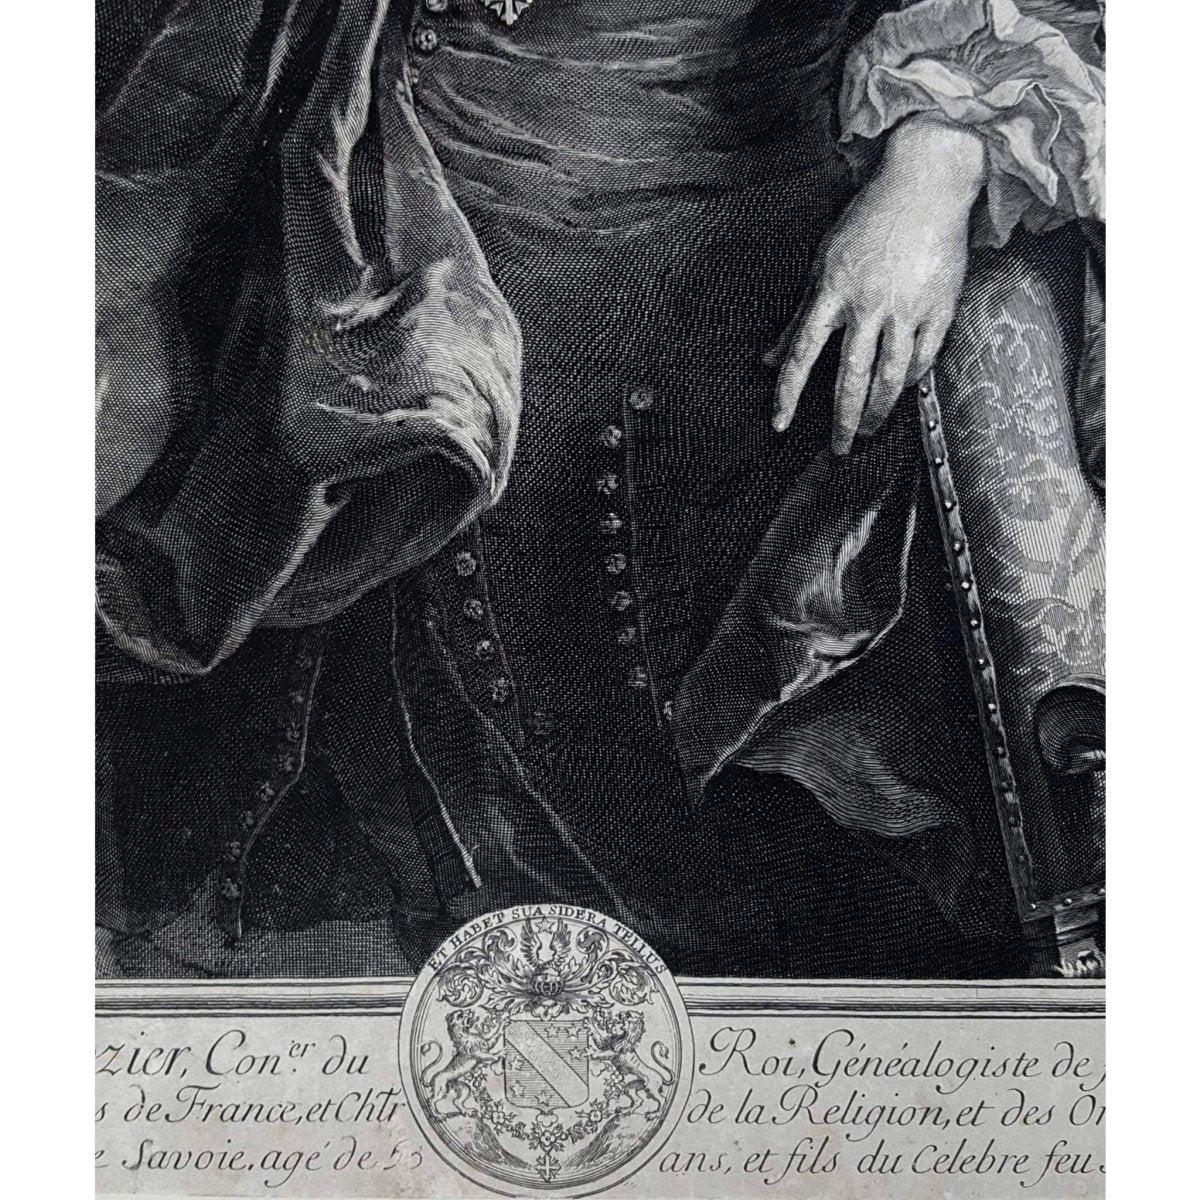 Antique portrait engraving Charles d'Hozier after Rigaud original 1691 by Gerard Edelinck for sale at Winckelmann Gallery